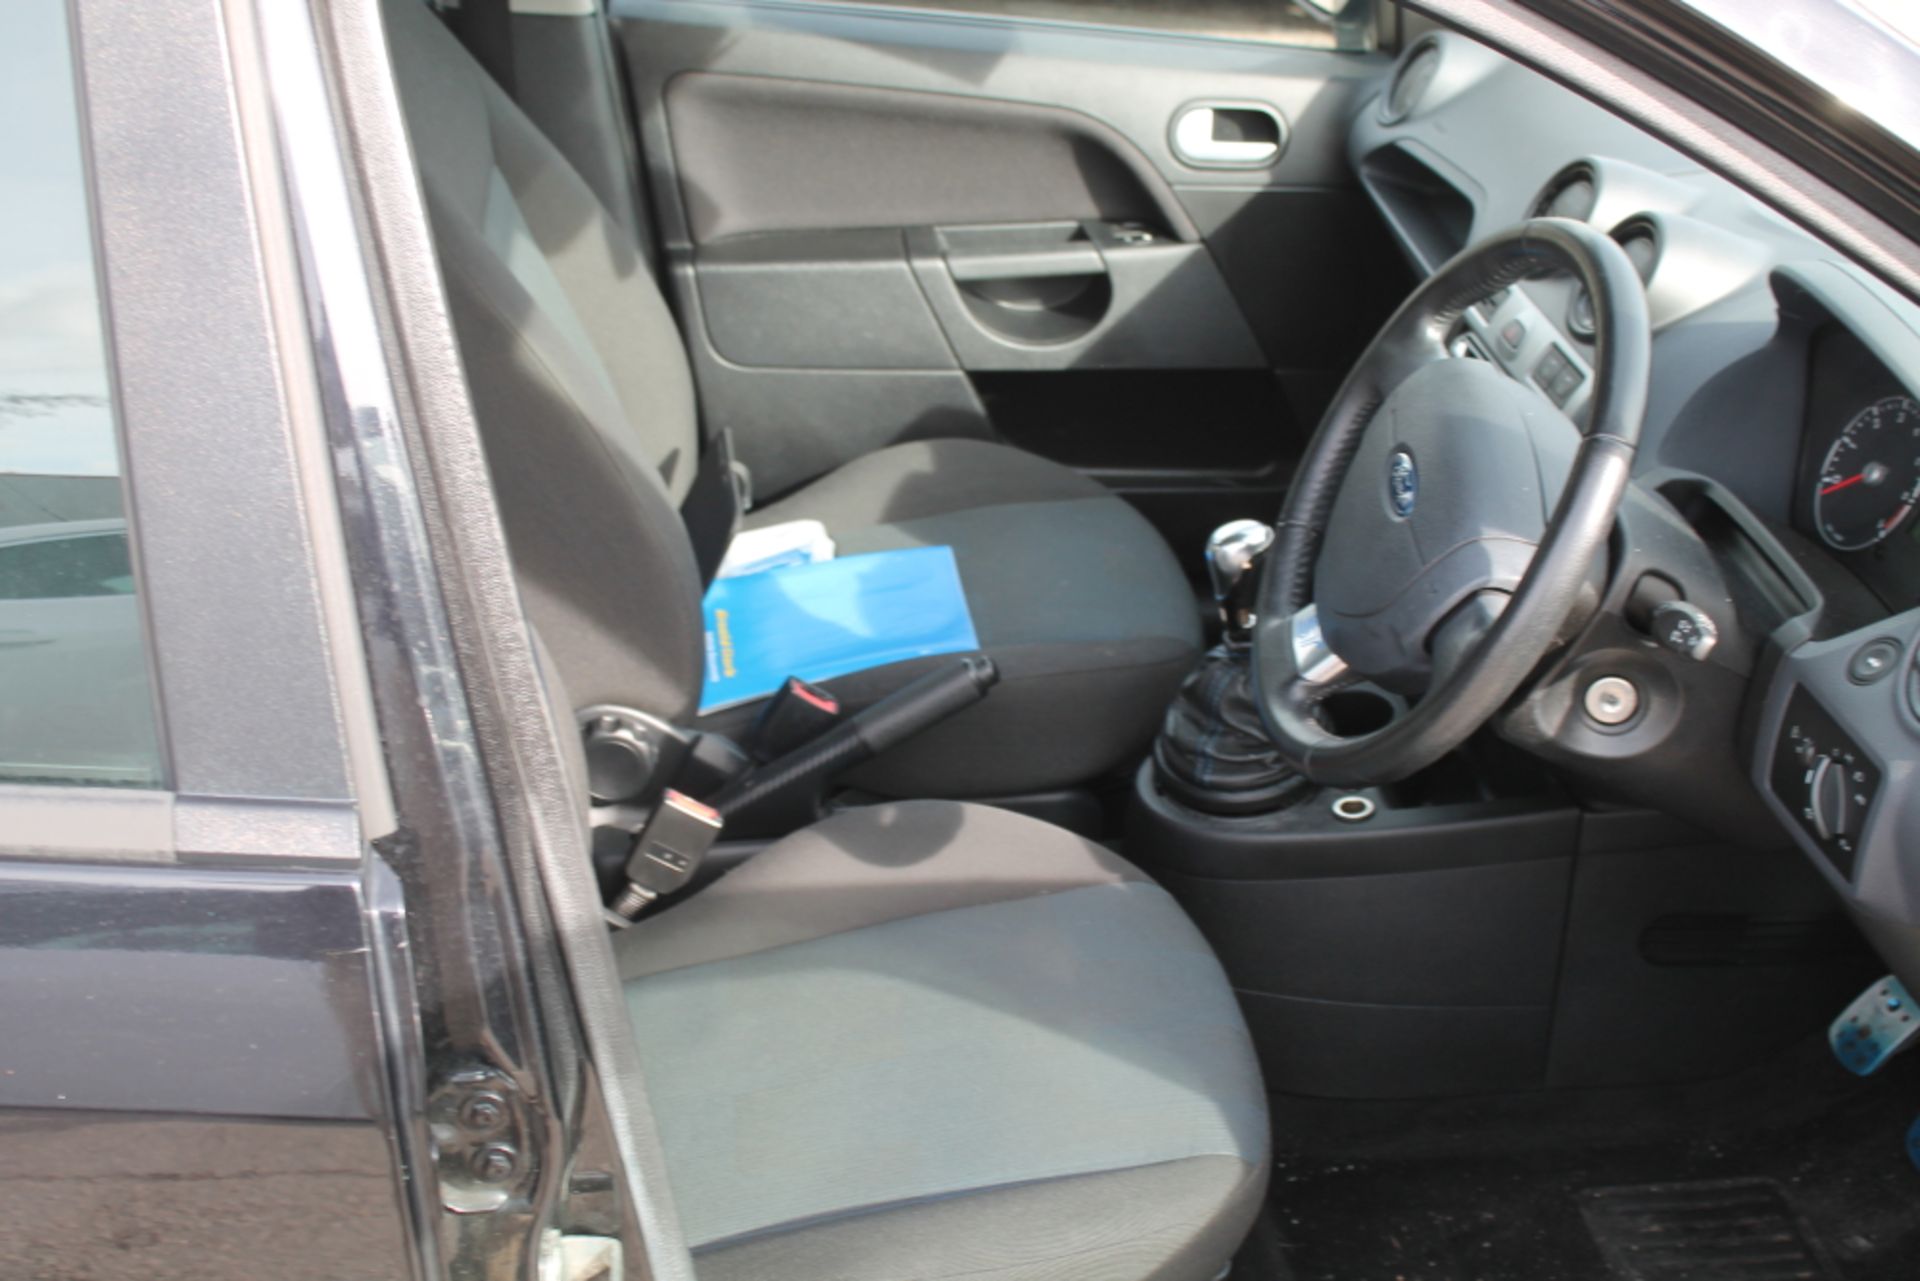 Ford Fiesta Zetec Climate - 1388cc 5 Door - Image 6 of 10